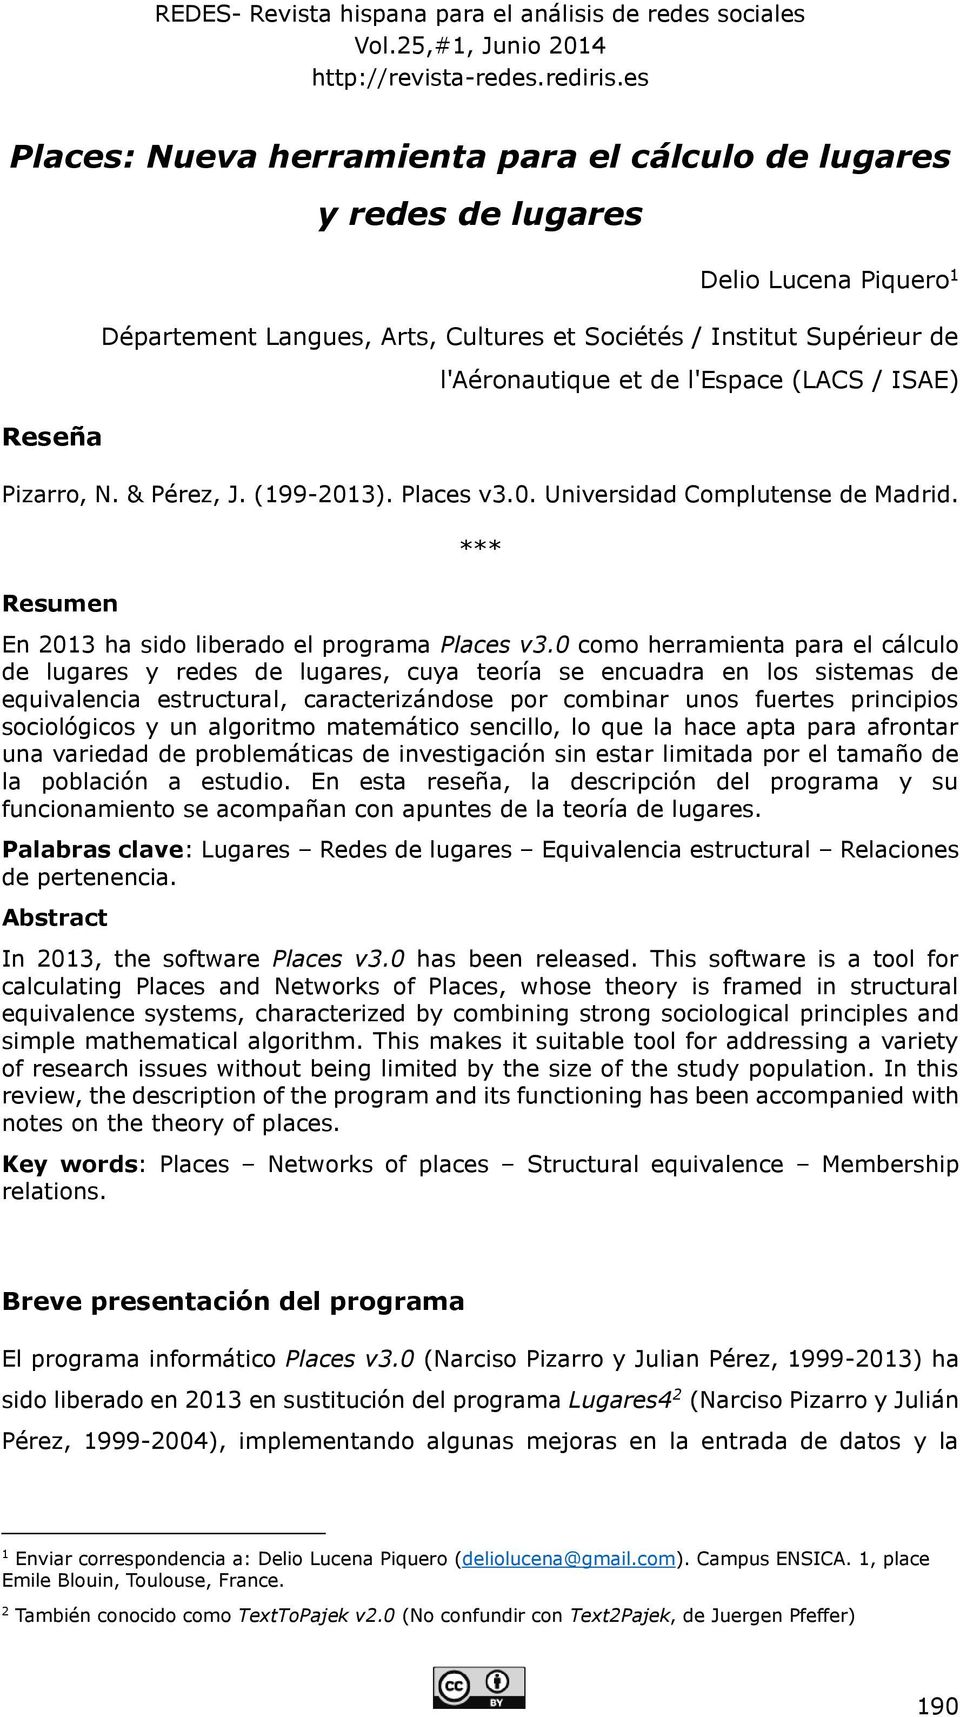 l'espace (LACS / ISAE) Pizarro, N. & Pérez, J. (199-2013). Places v3.0. Universidad Complutense de Madrid. Resumen *** En 2013 ha sido liberado el programa Places v3.